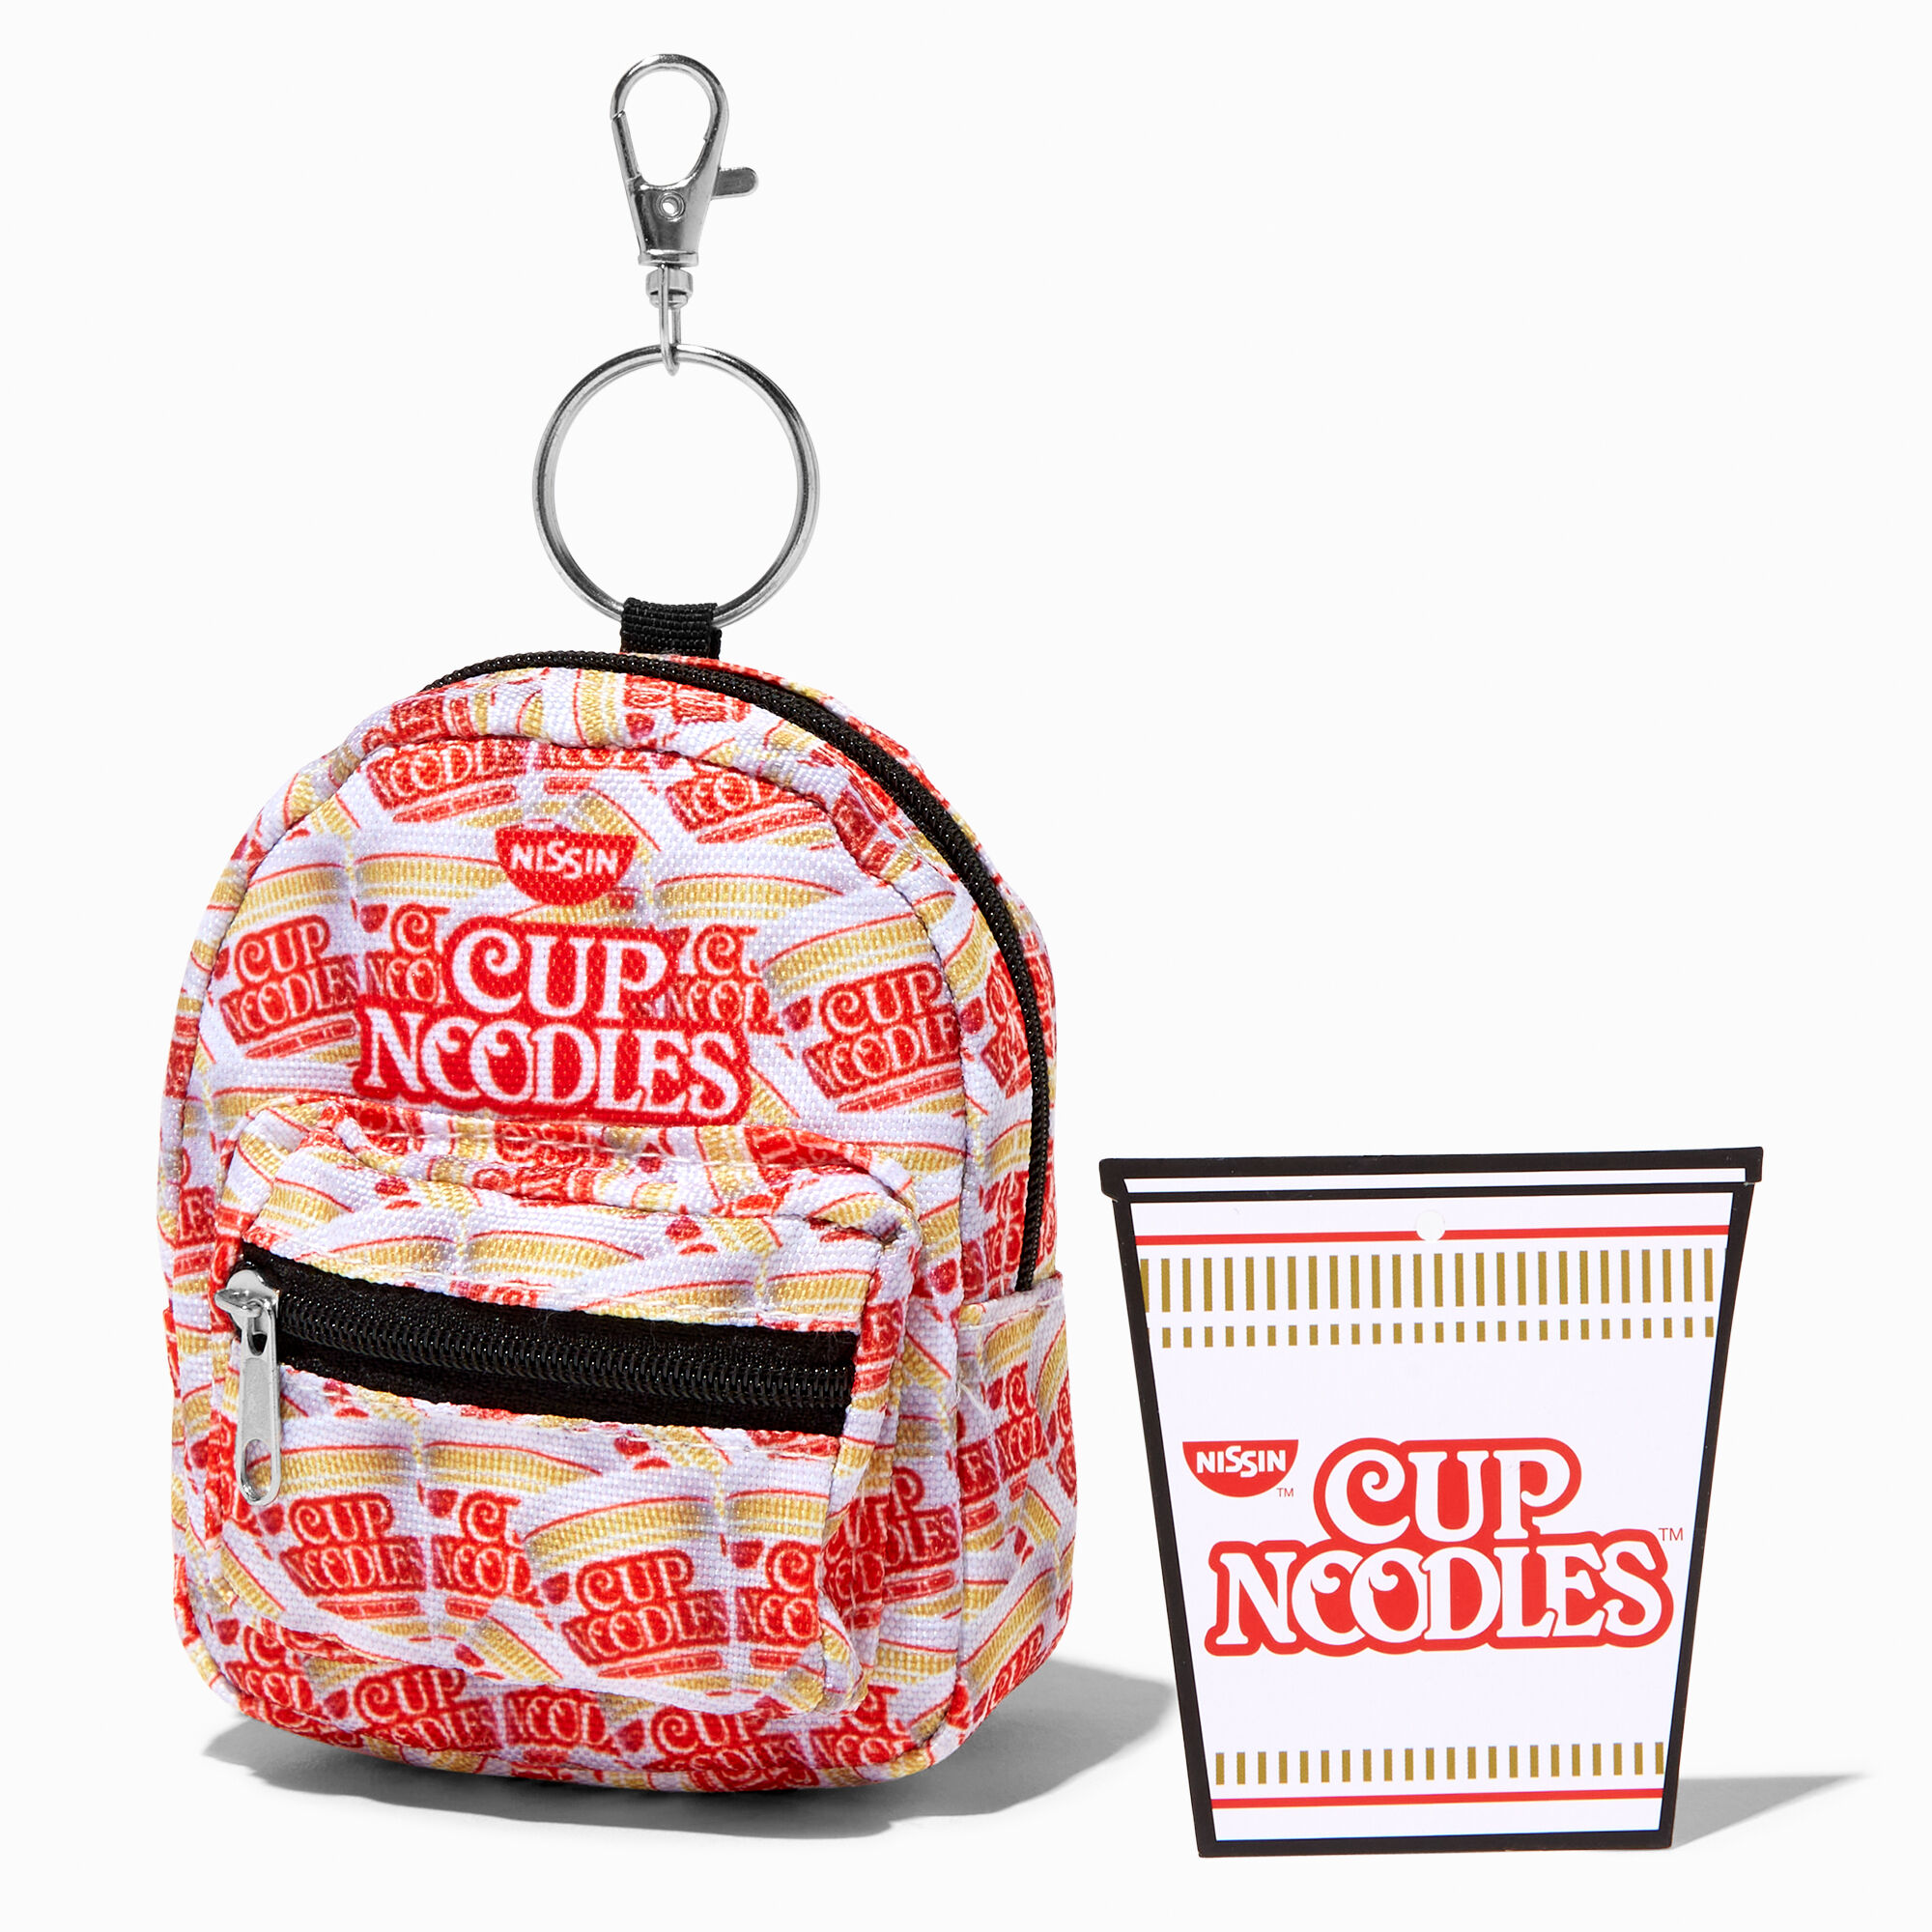 Blow Pop® BubbleGum Snack Attack Mini Backpack Keychain